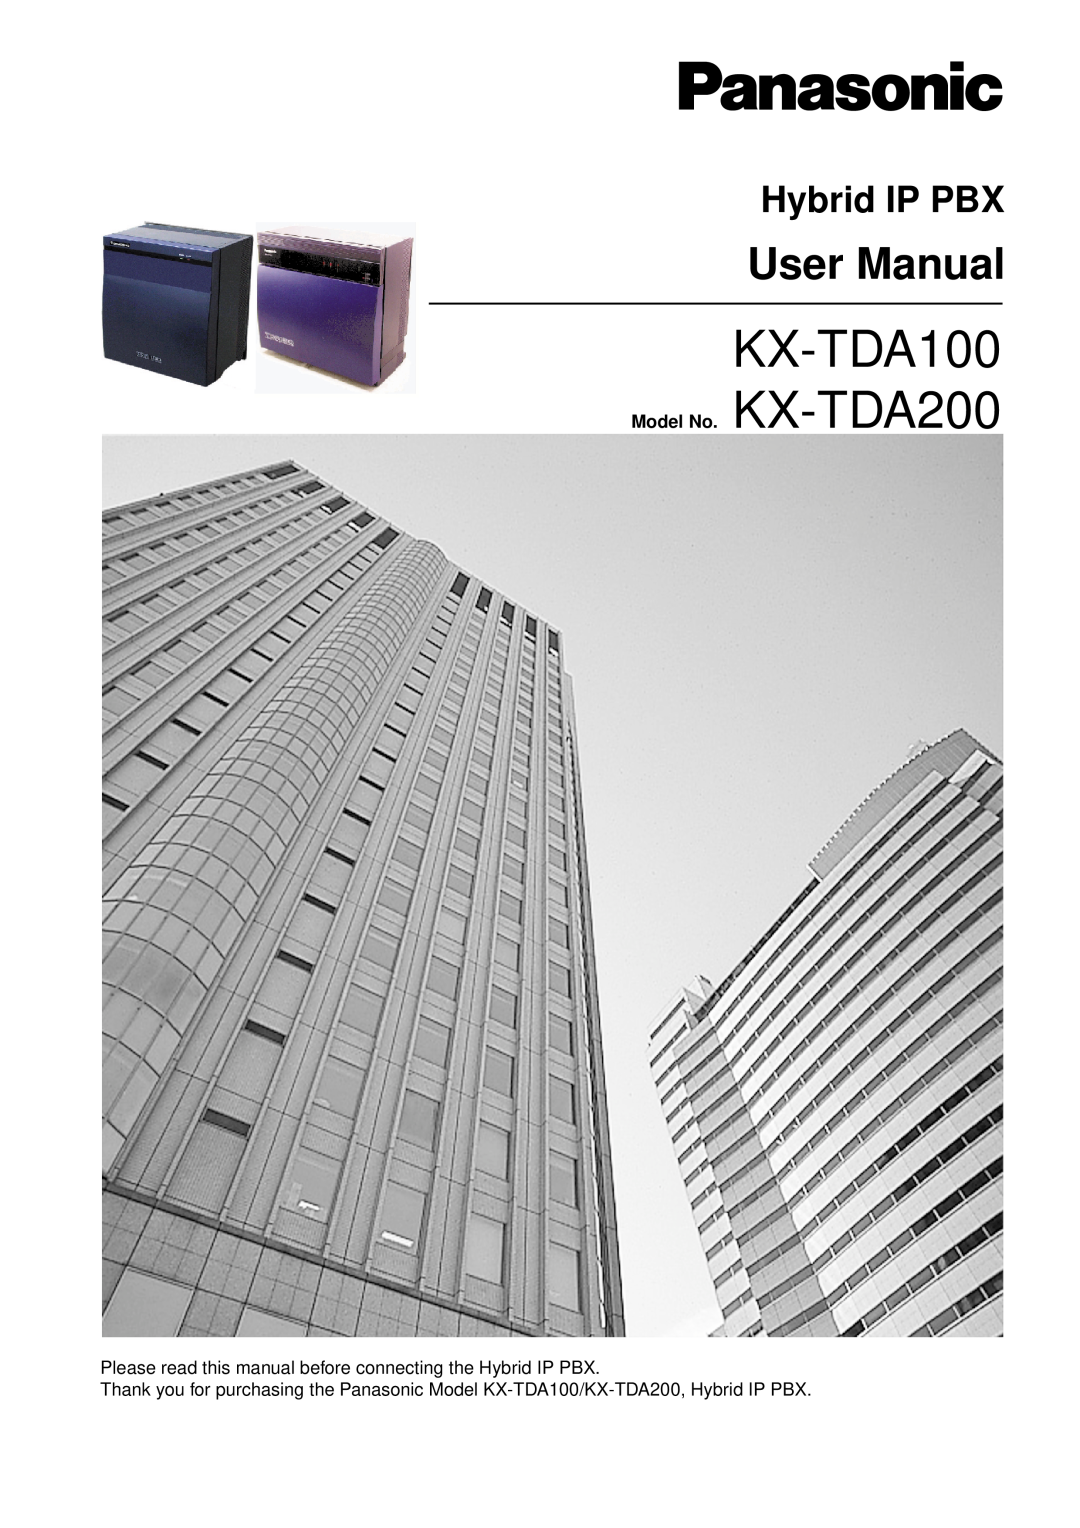 Panasonic manual Hybrid IP-PBX, PT Programming Manual, KX-TDA30/KX-TDA100 Model KX-TDA200/KX-TDA600 